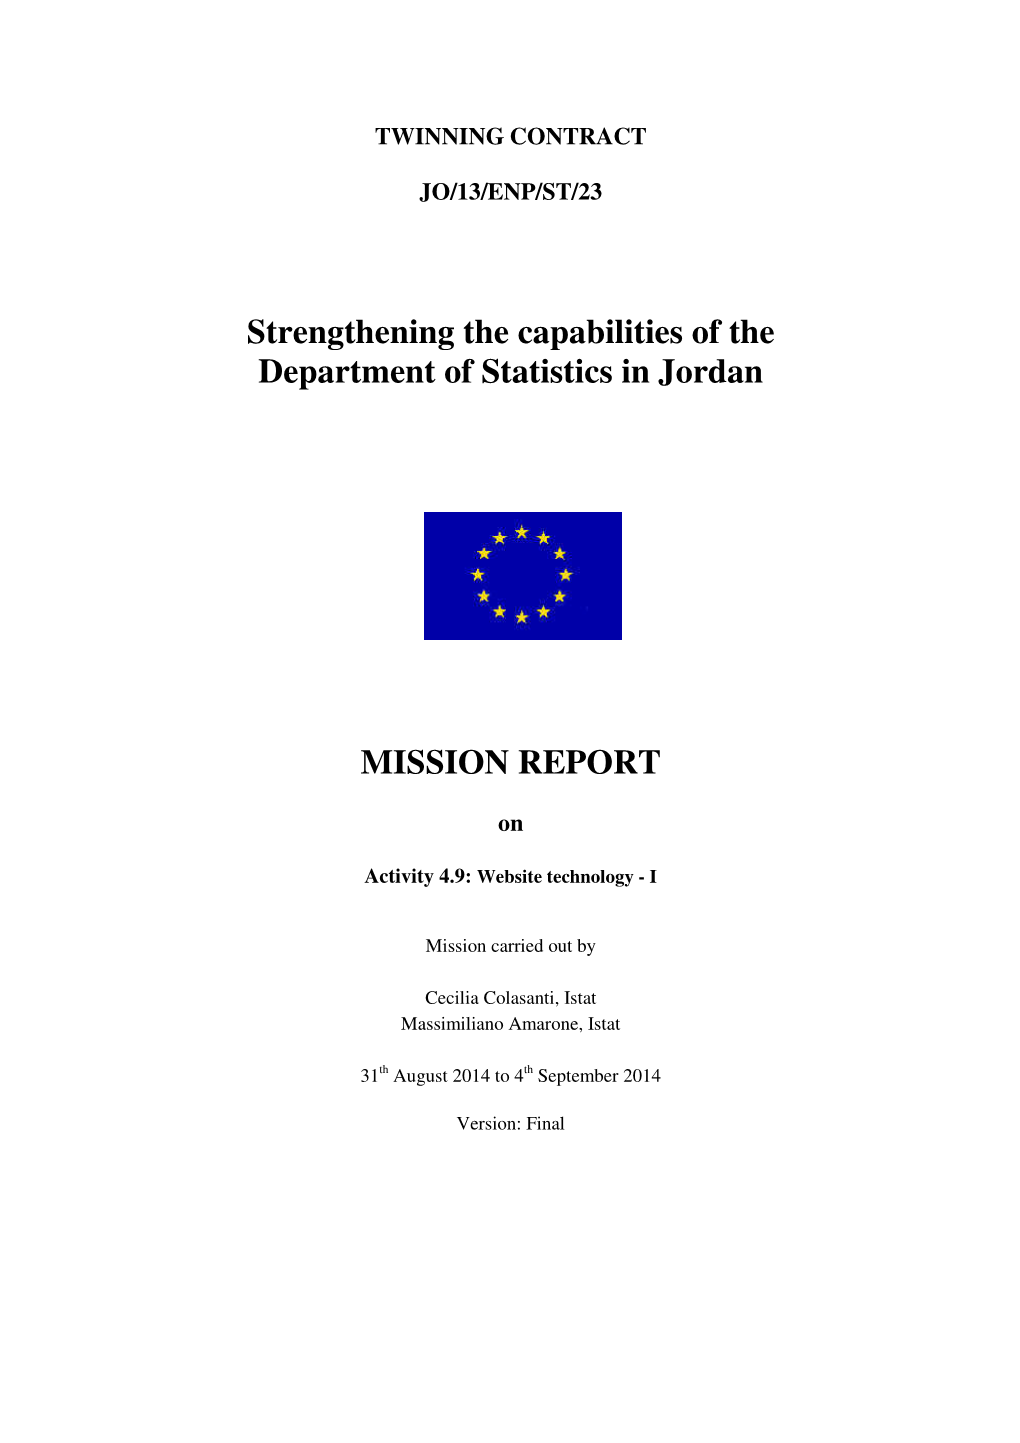 Strengthening the Capabilities of the Department of Statistics in Jordan